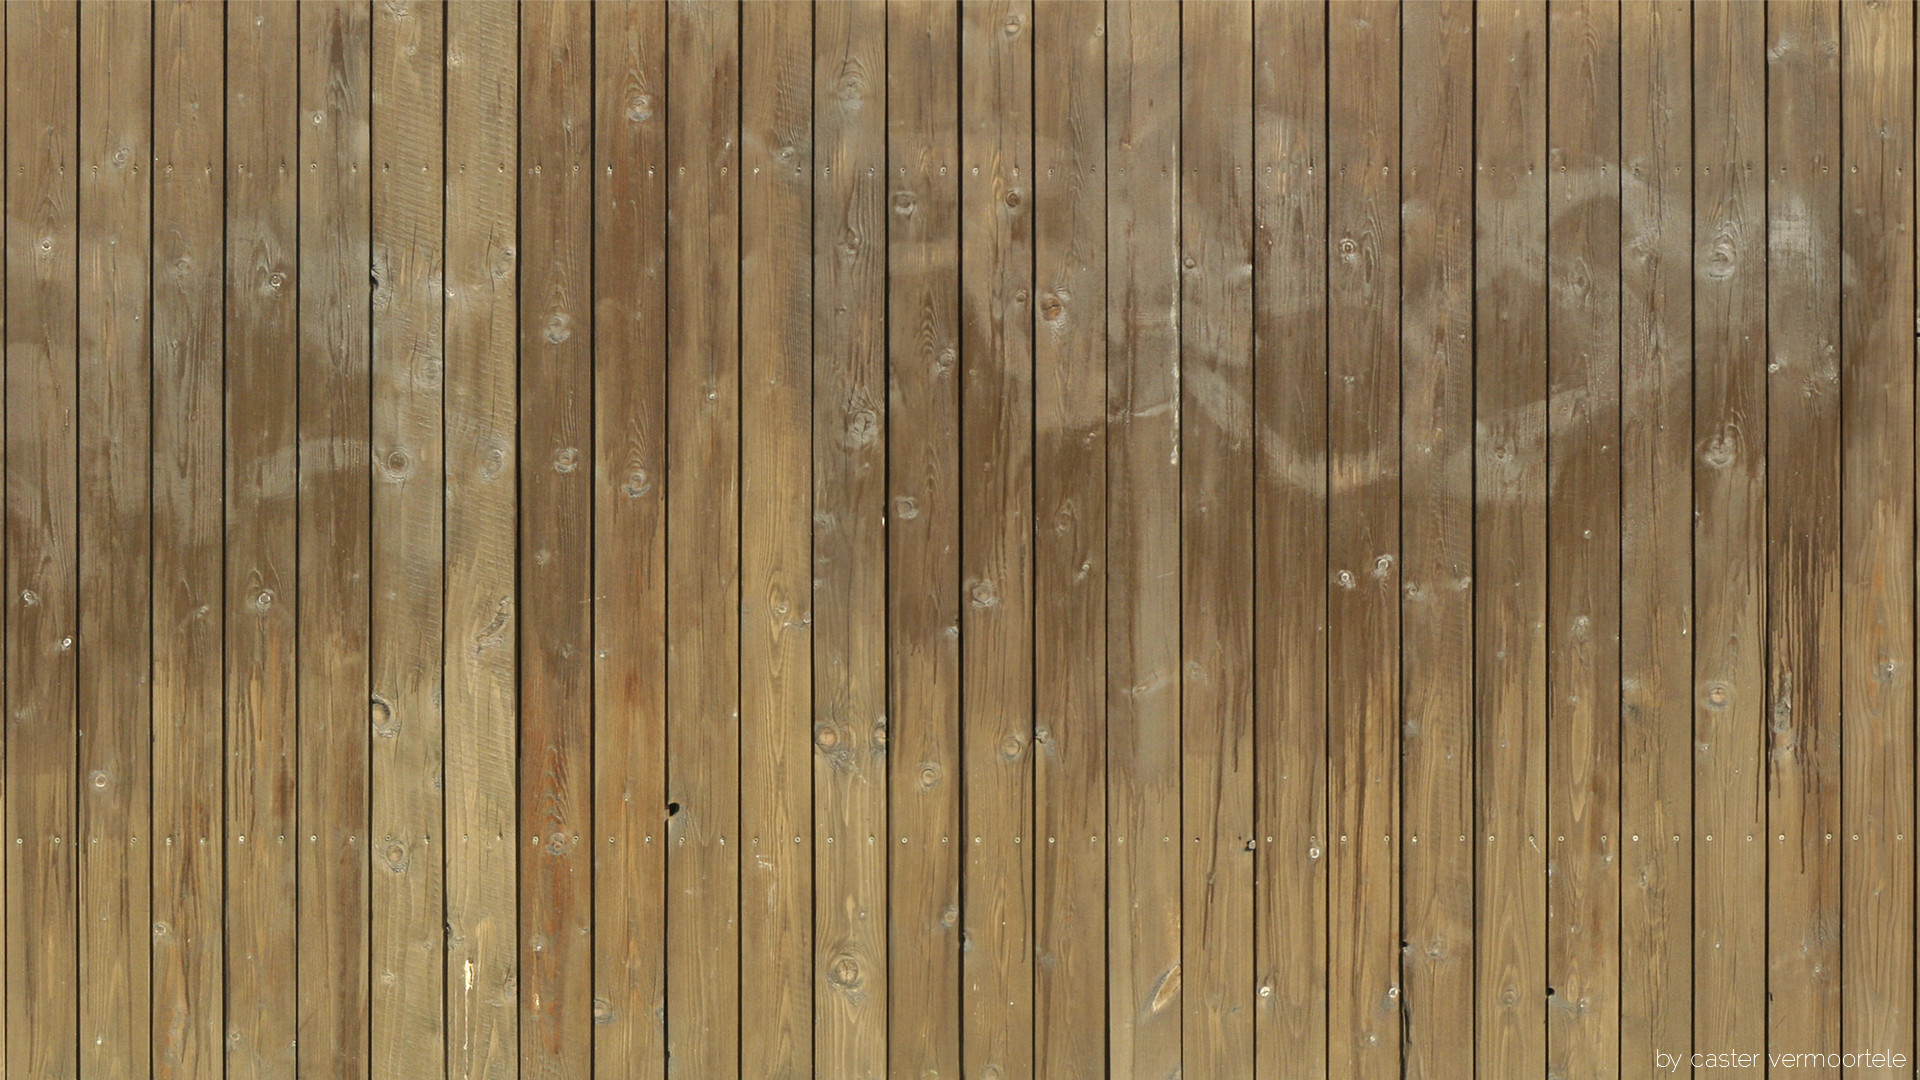 1920x1080 25+ Wood Floor Backgrounds | FreeCreatives